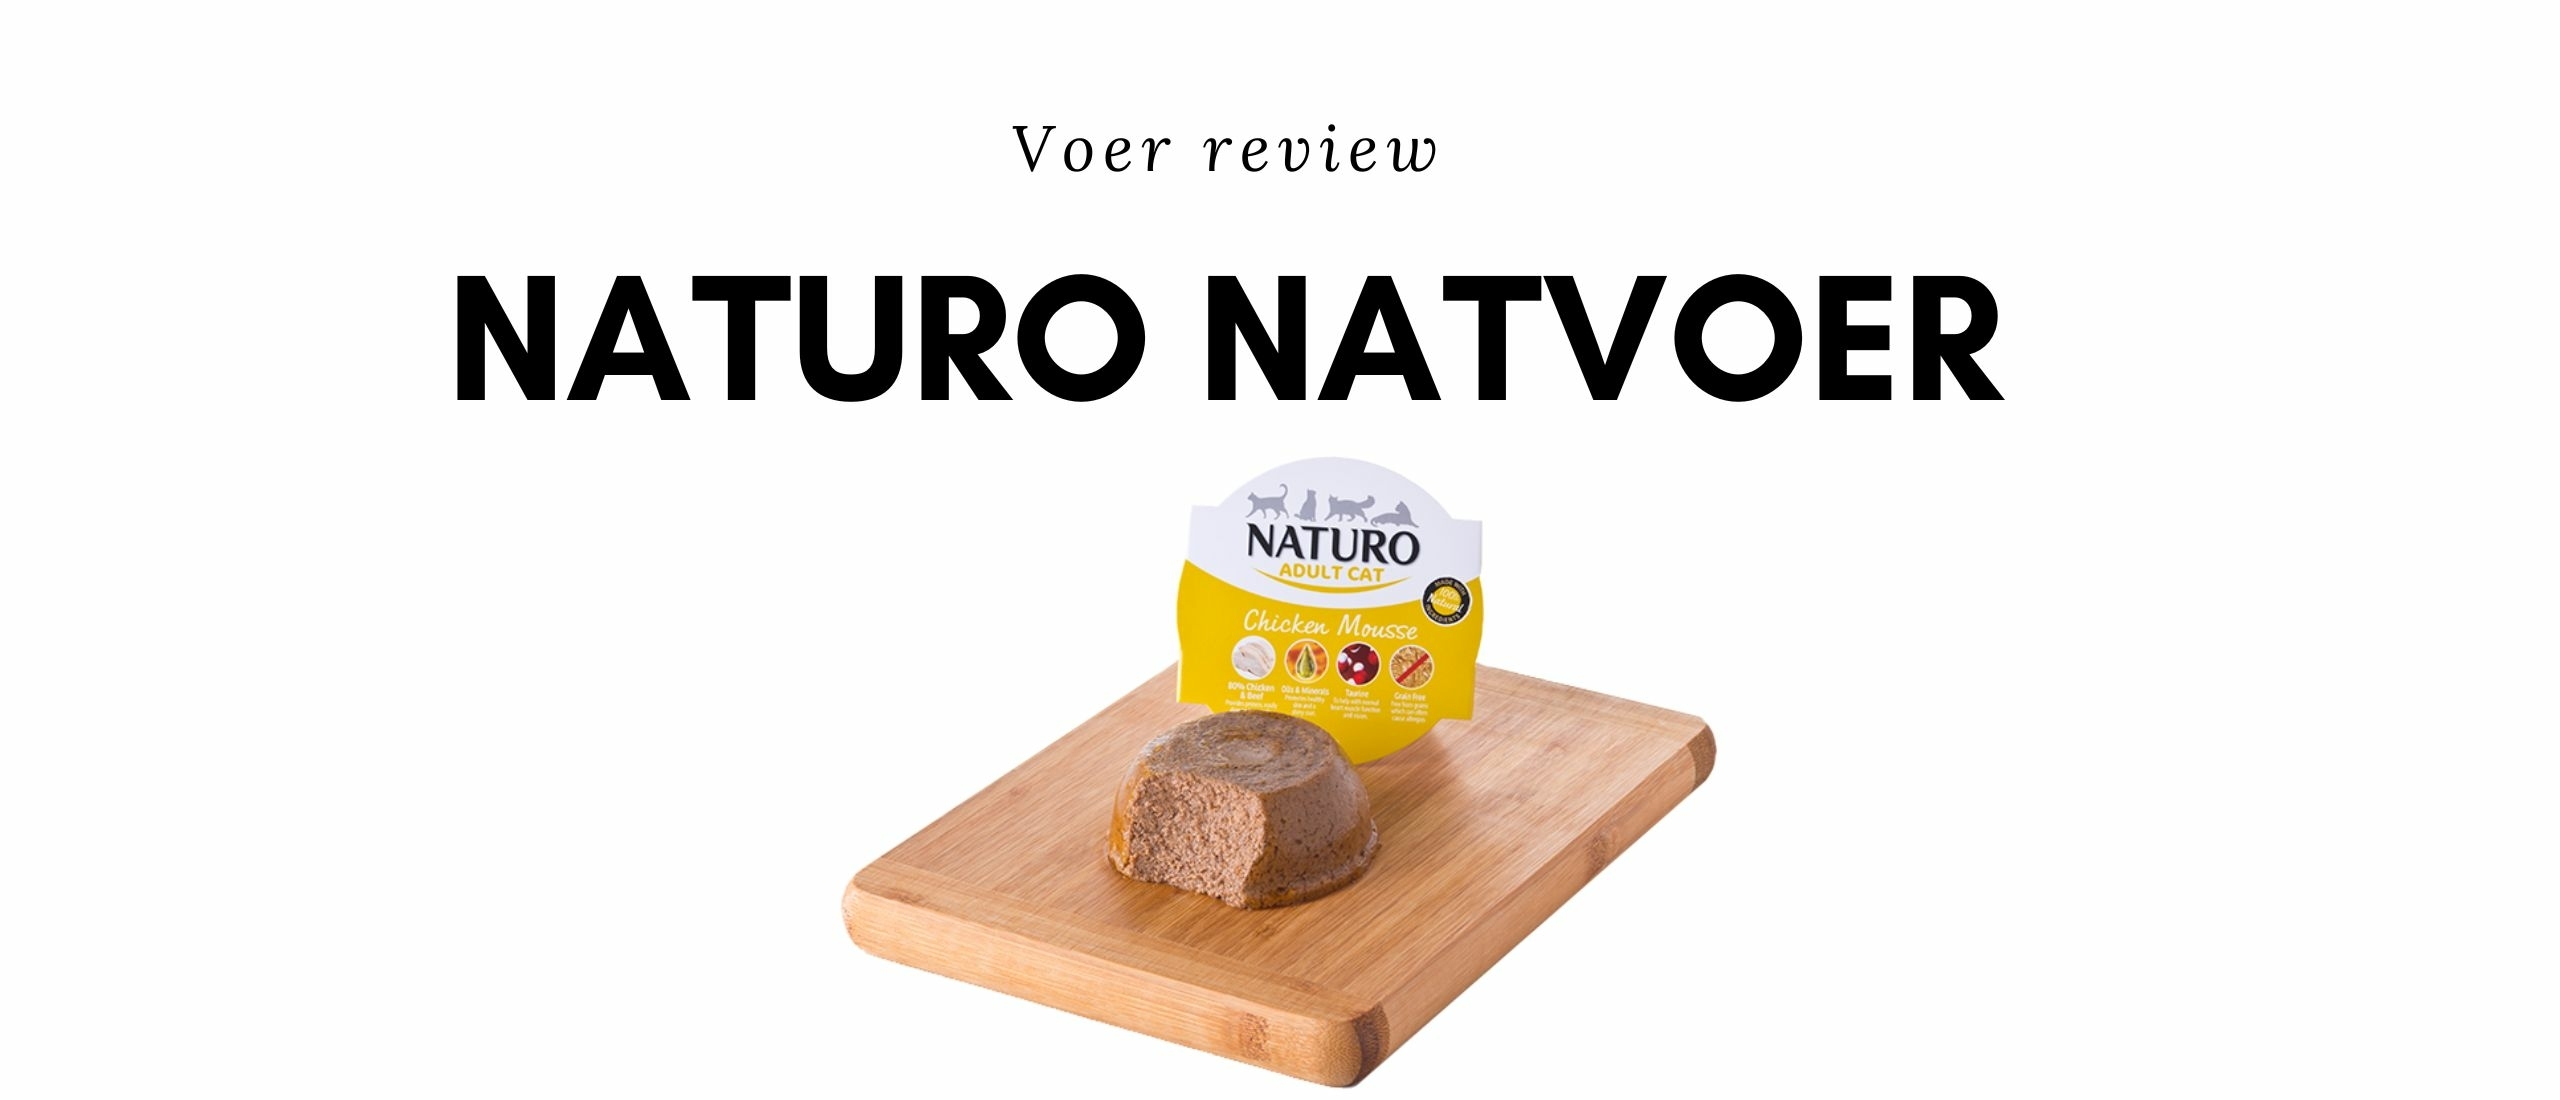 Voer review Naturo Natvoer